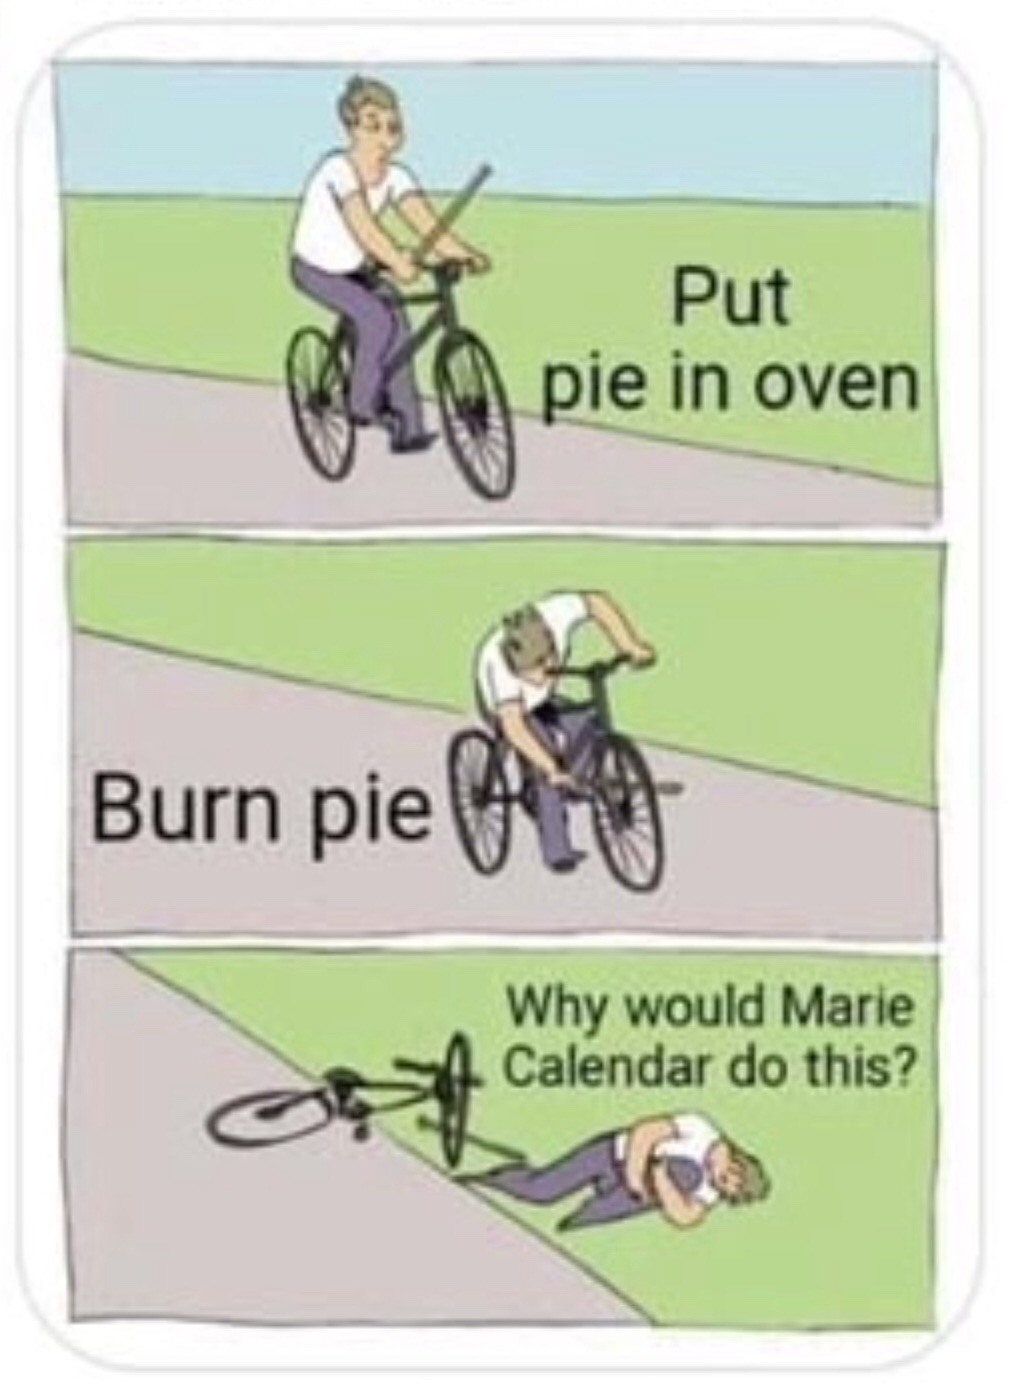 Sharon’s pie - meme